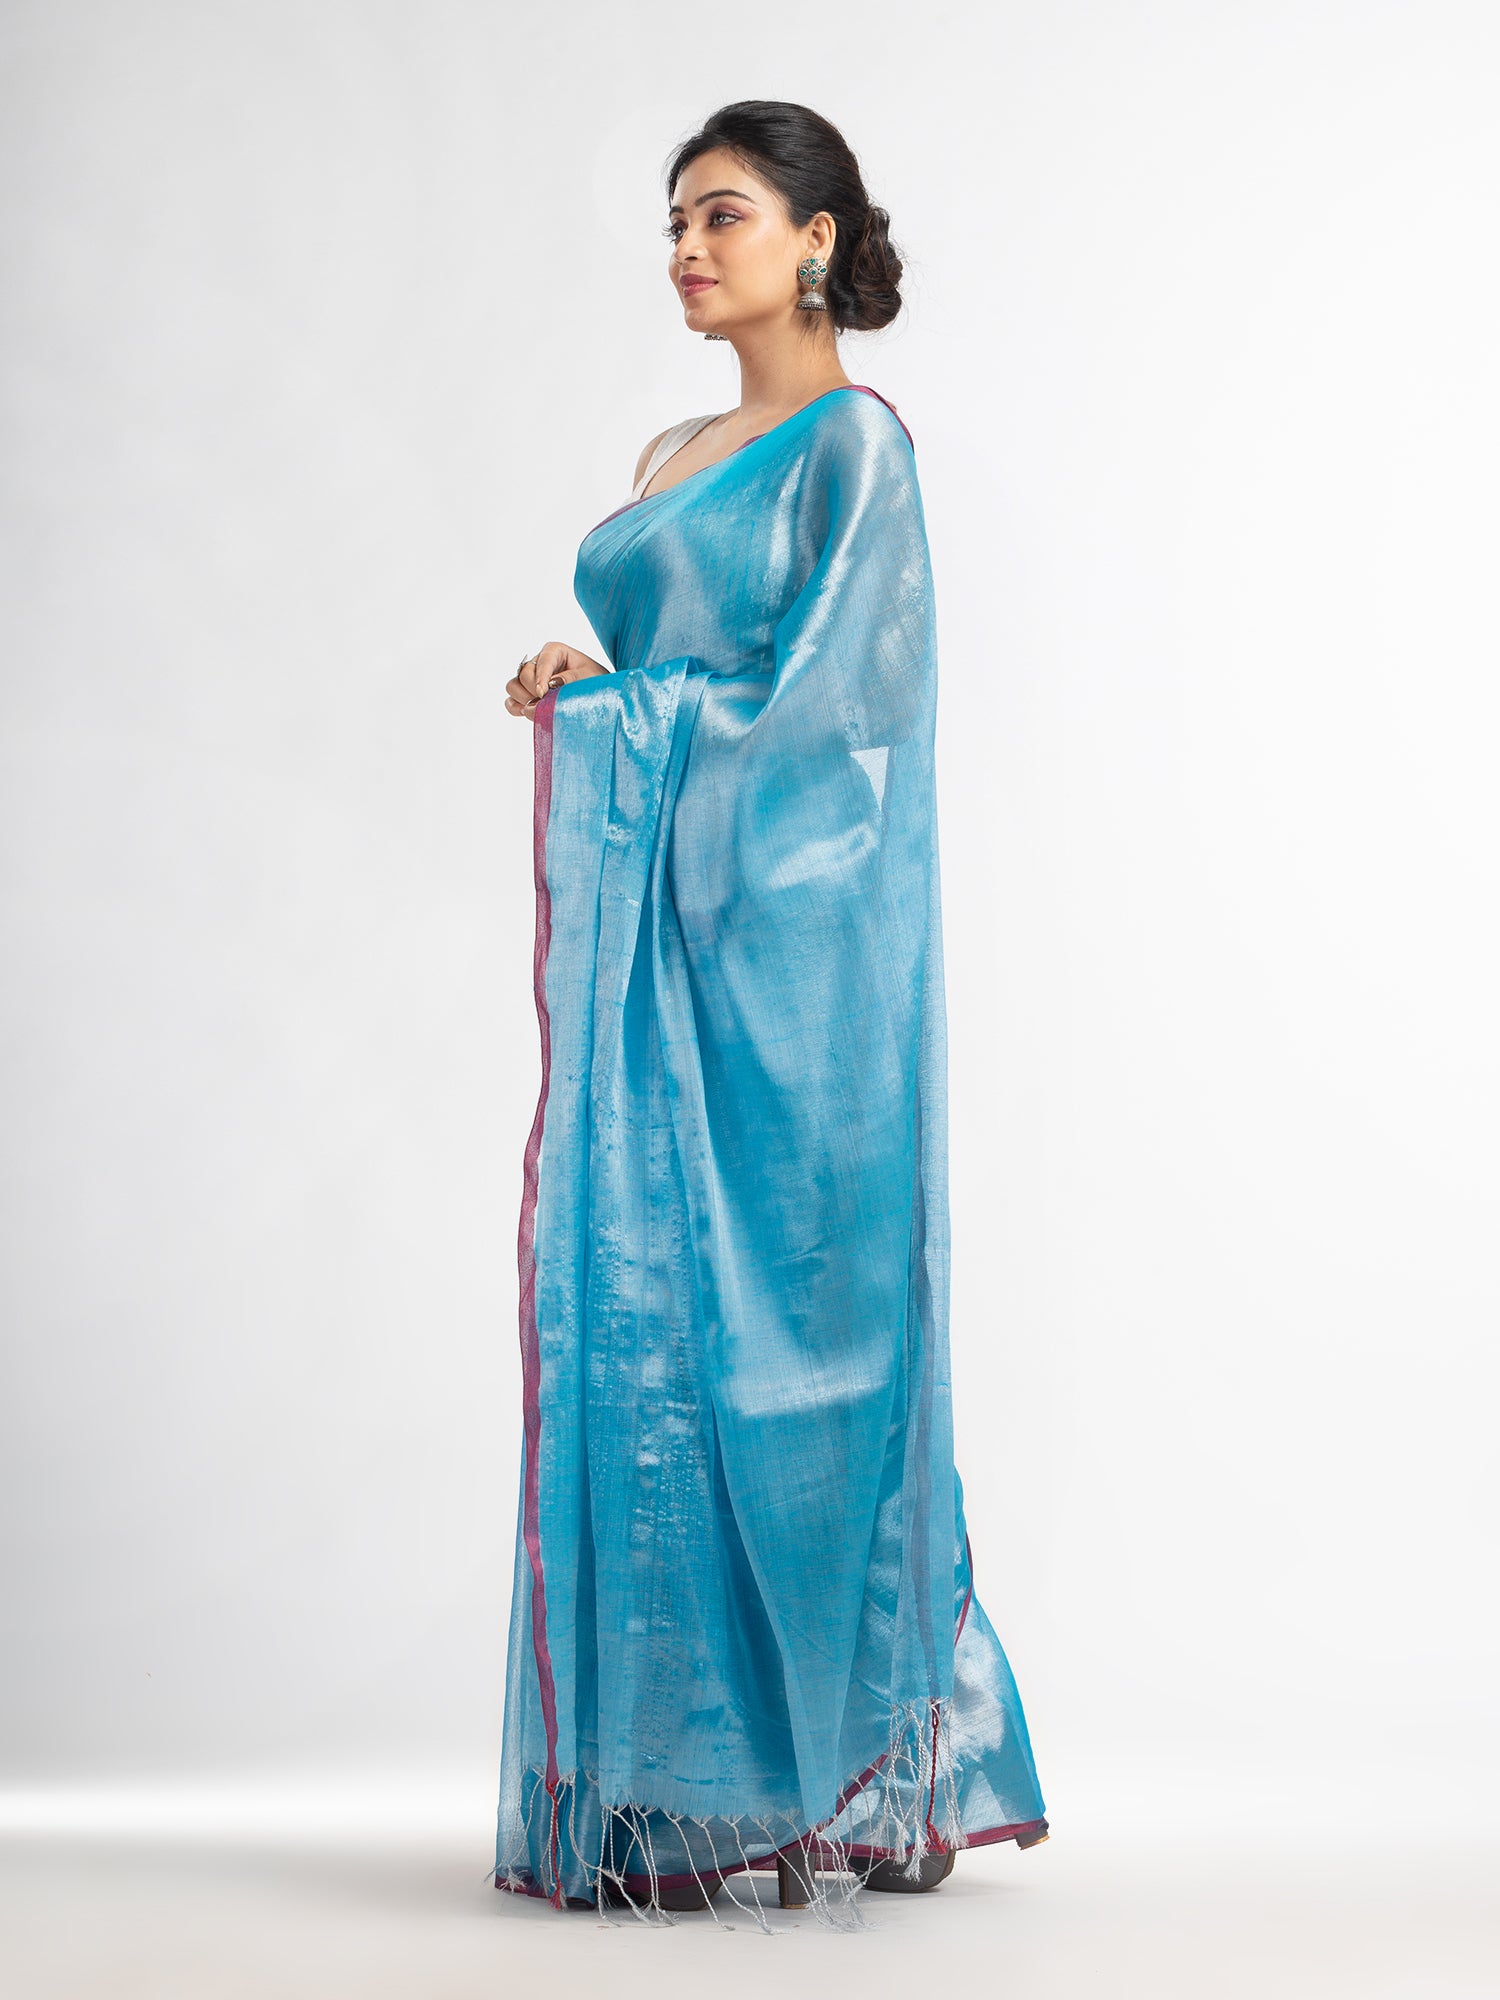 Women's Sky blue tissue cotton solit haif inchi border saree - Angoshobha